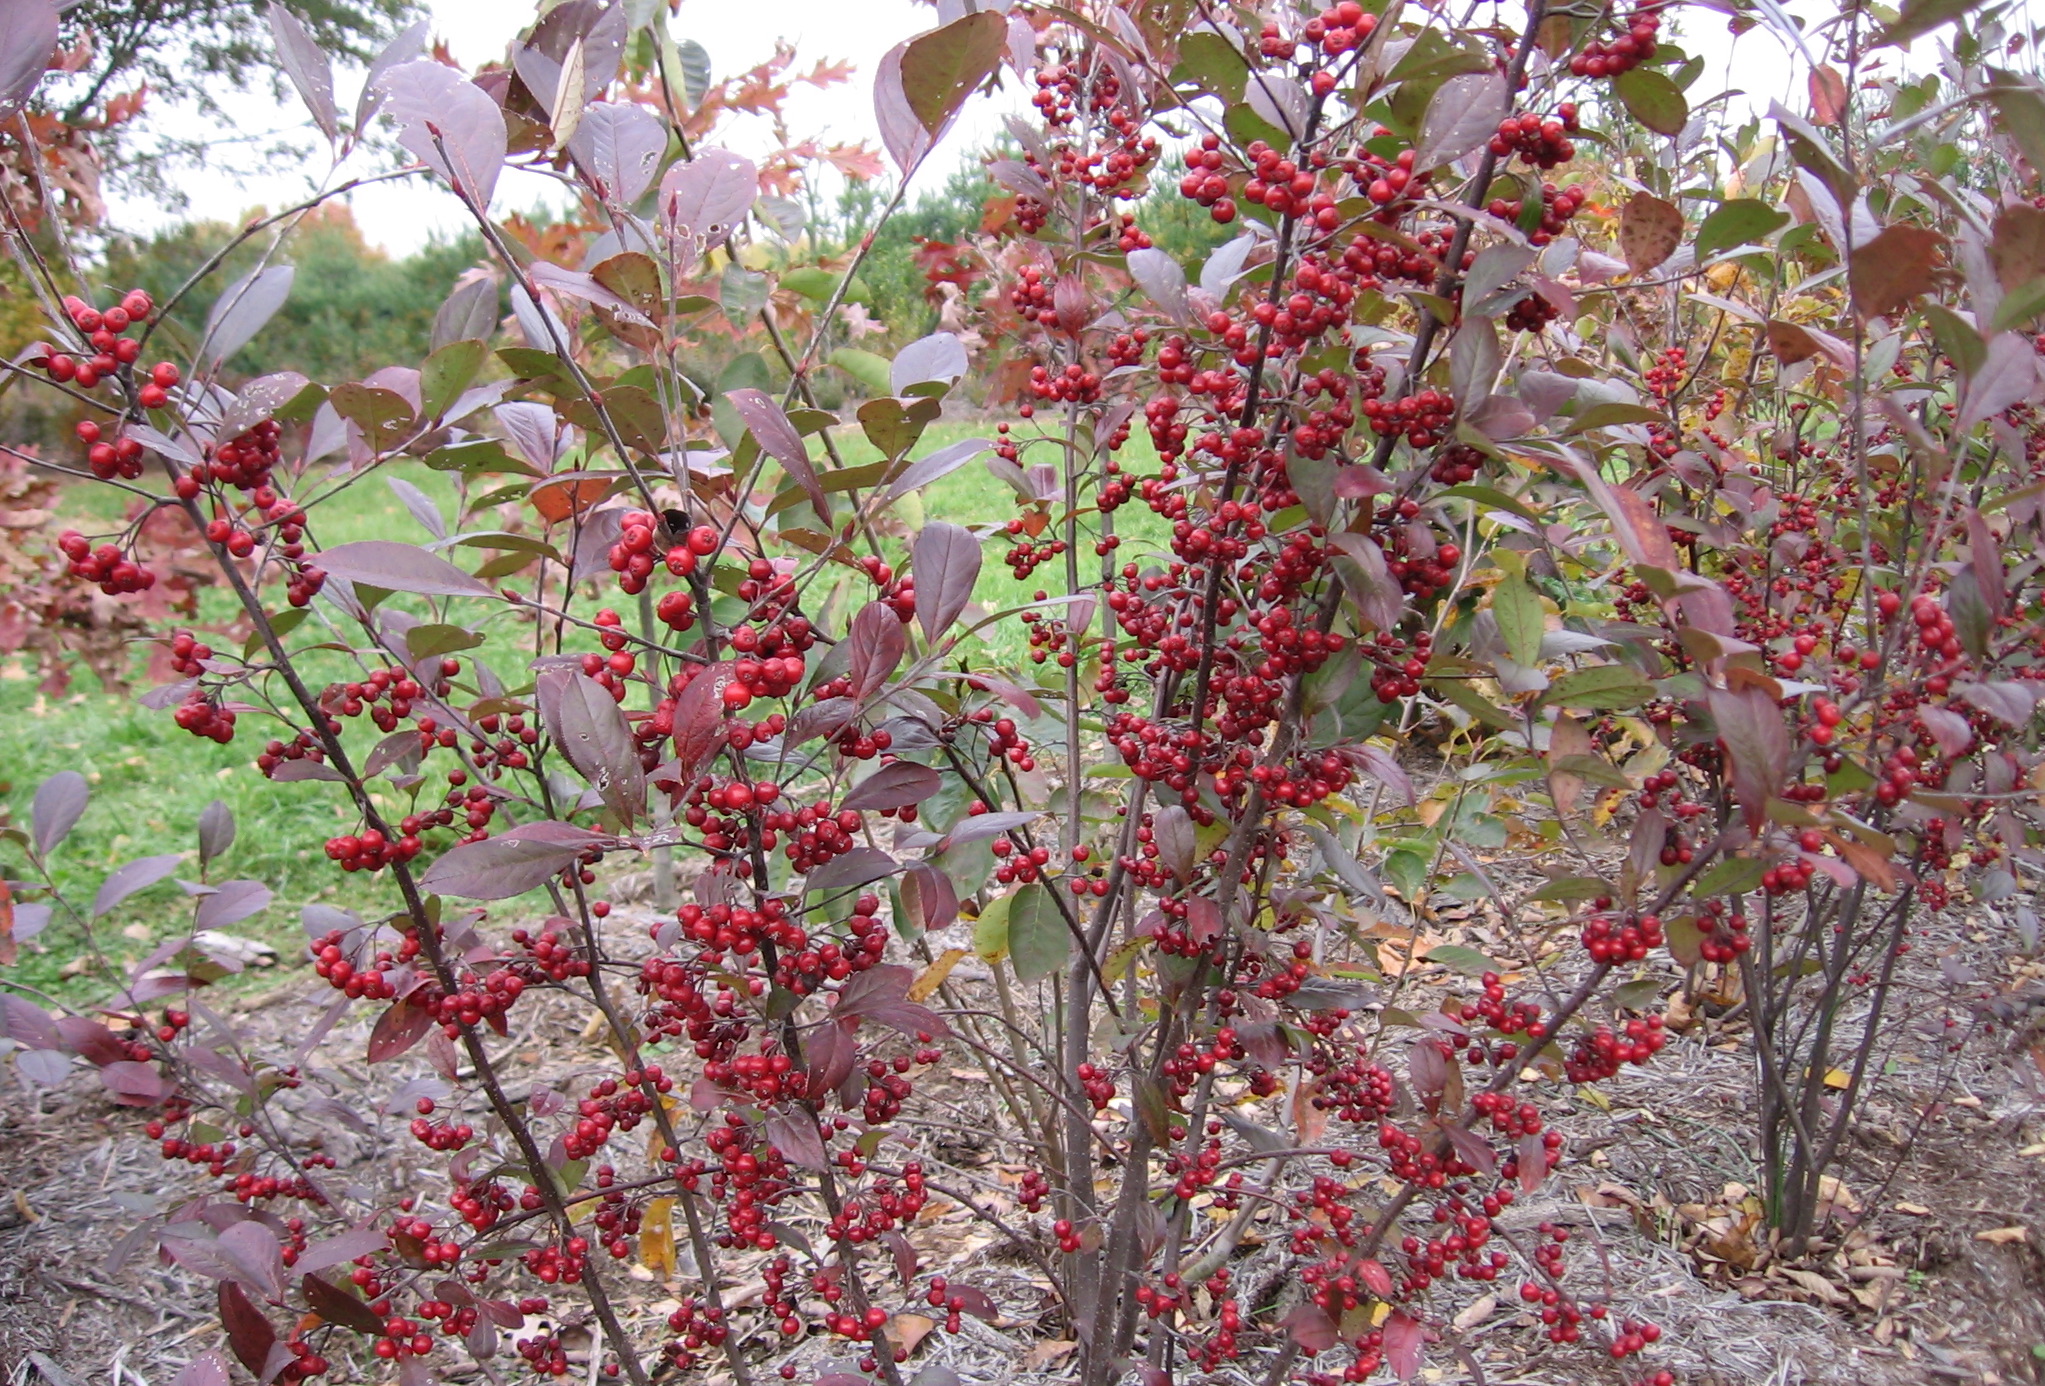 Red Chokeberry, Aronia arbutifolia pic.